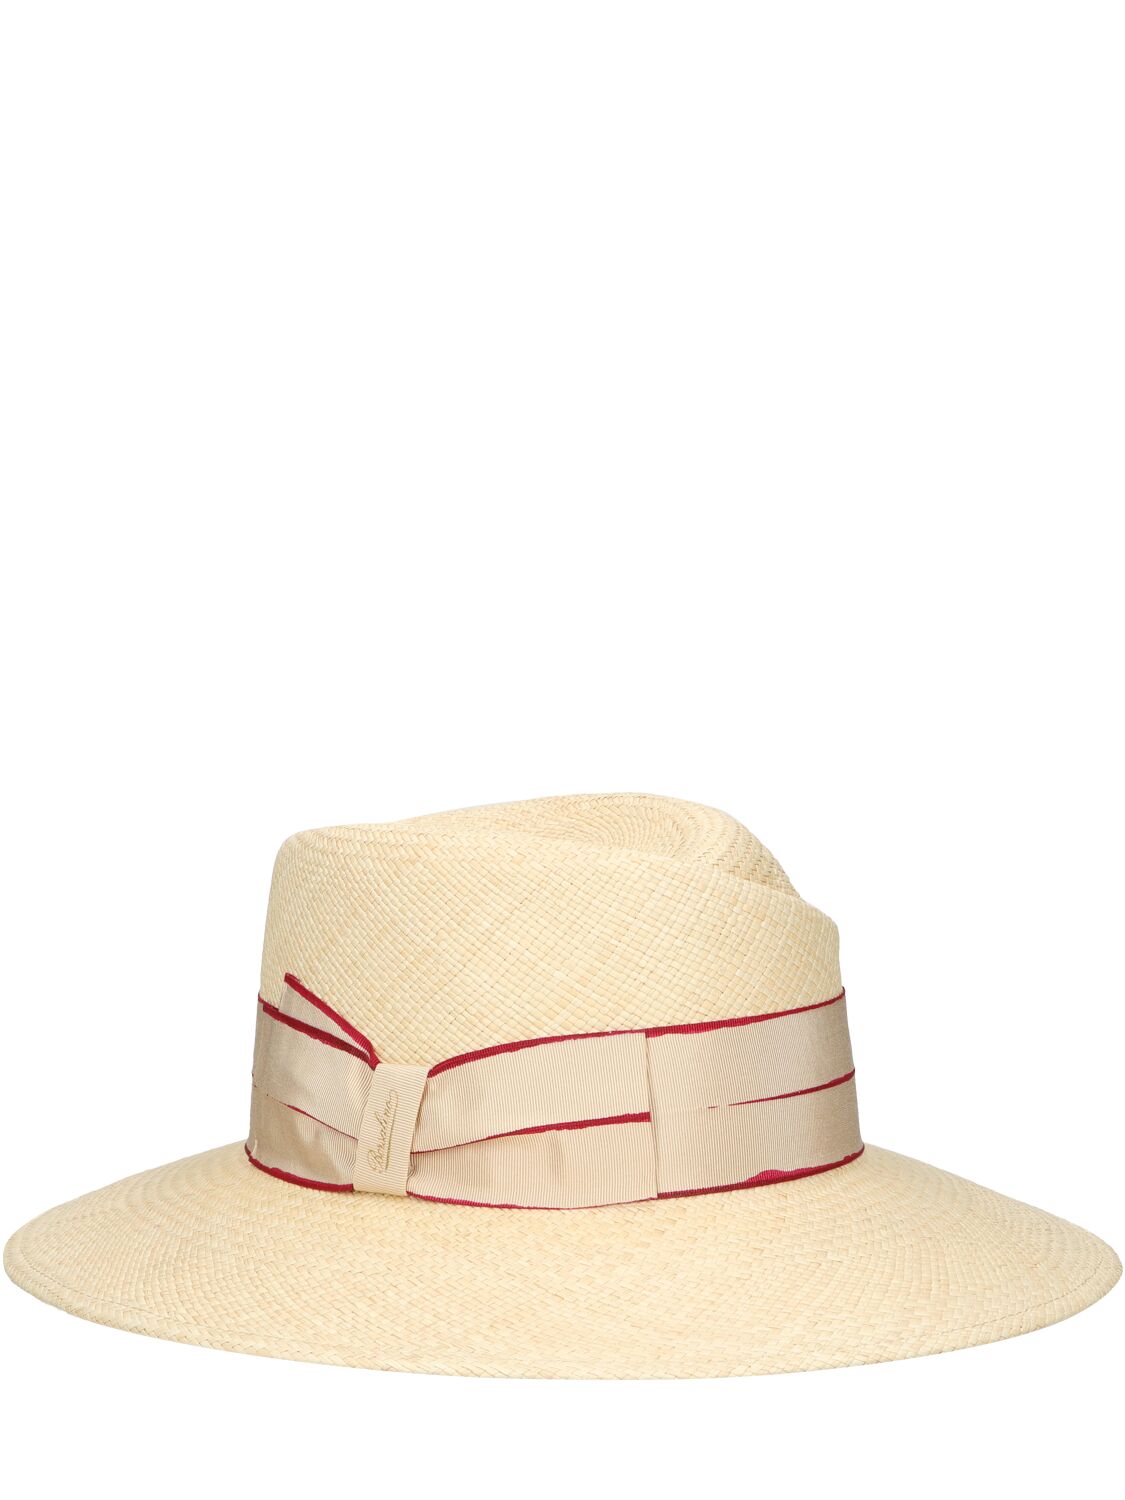 Image of Romy Straw Panama Hat